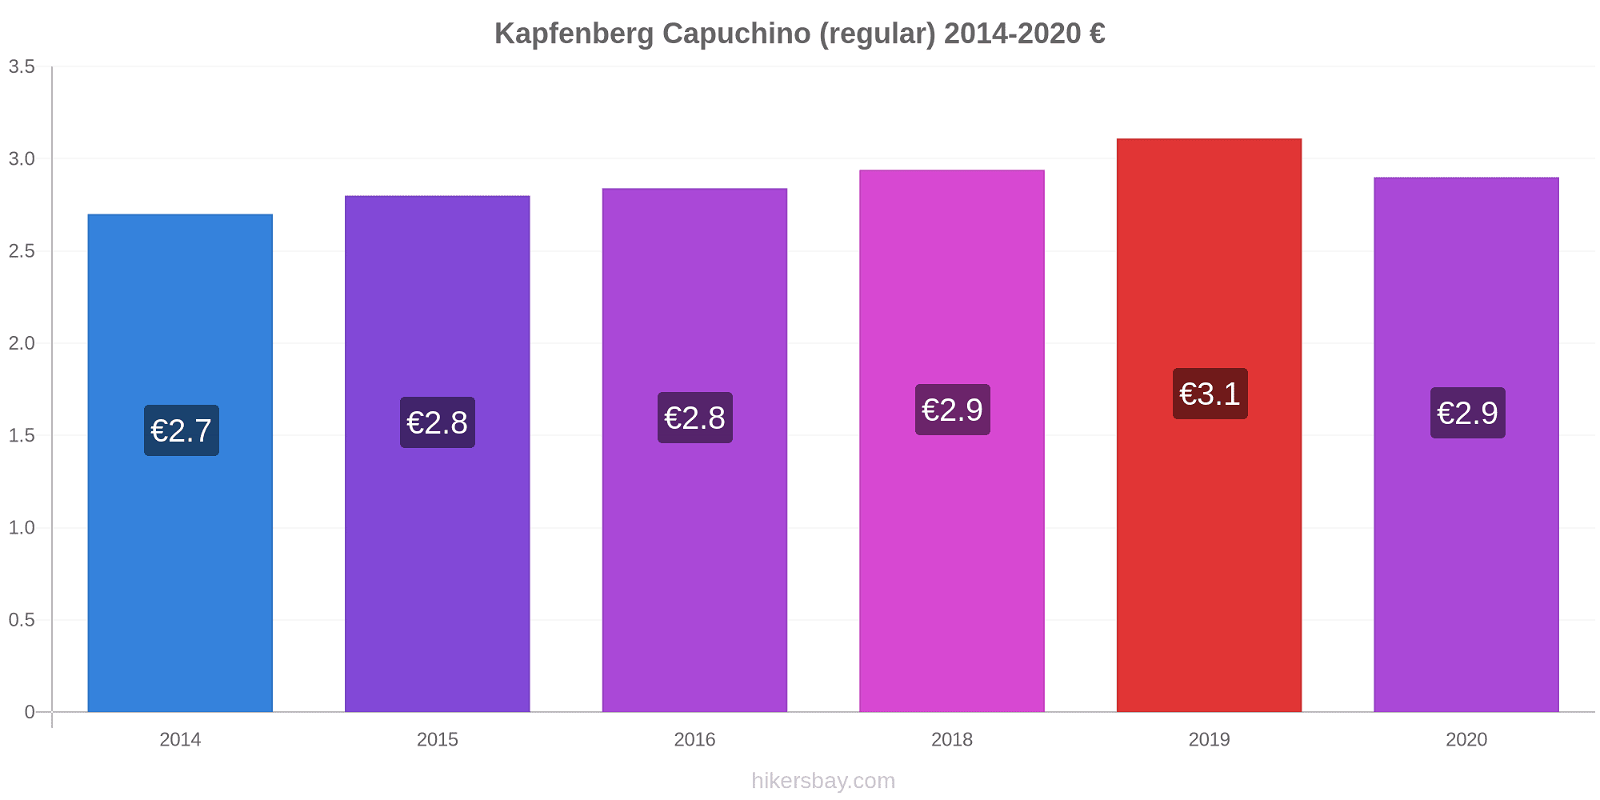 Kapfenberg cambios de precios Capuchino (regular) hikersbay.com